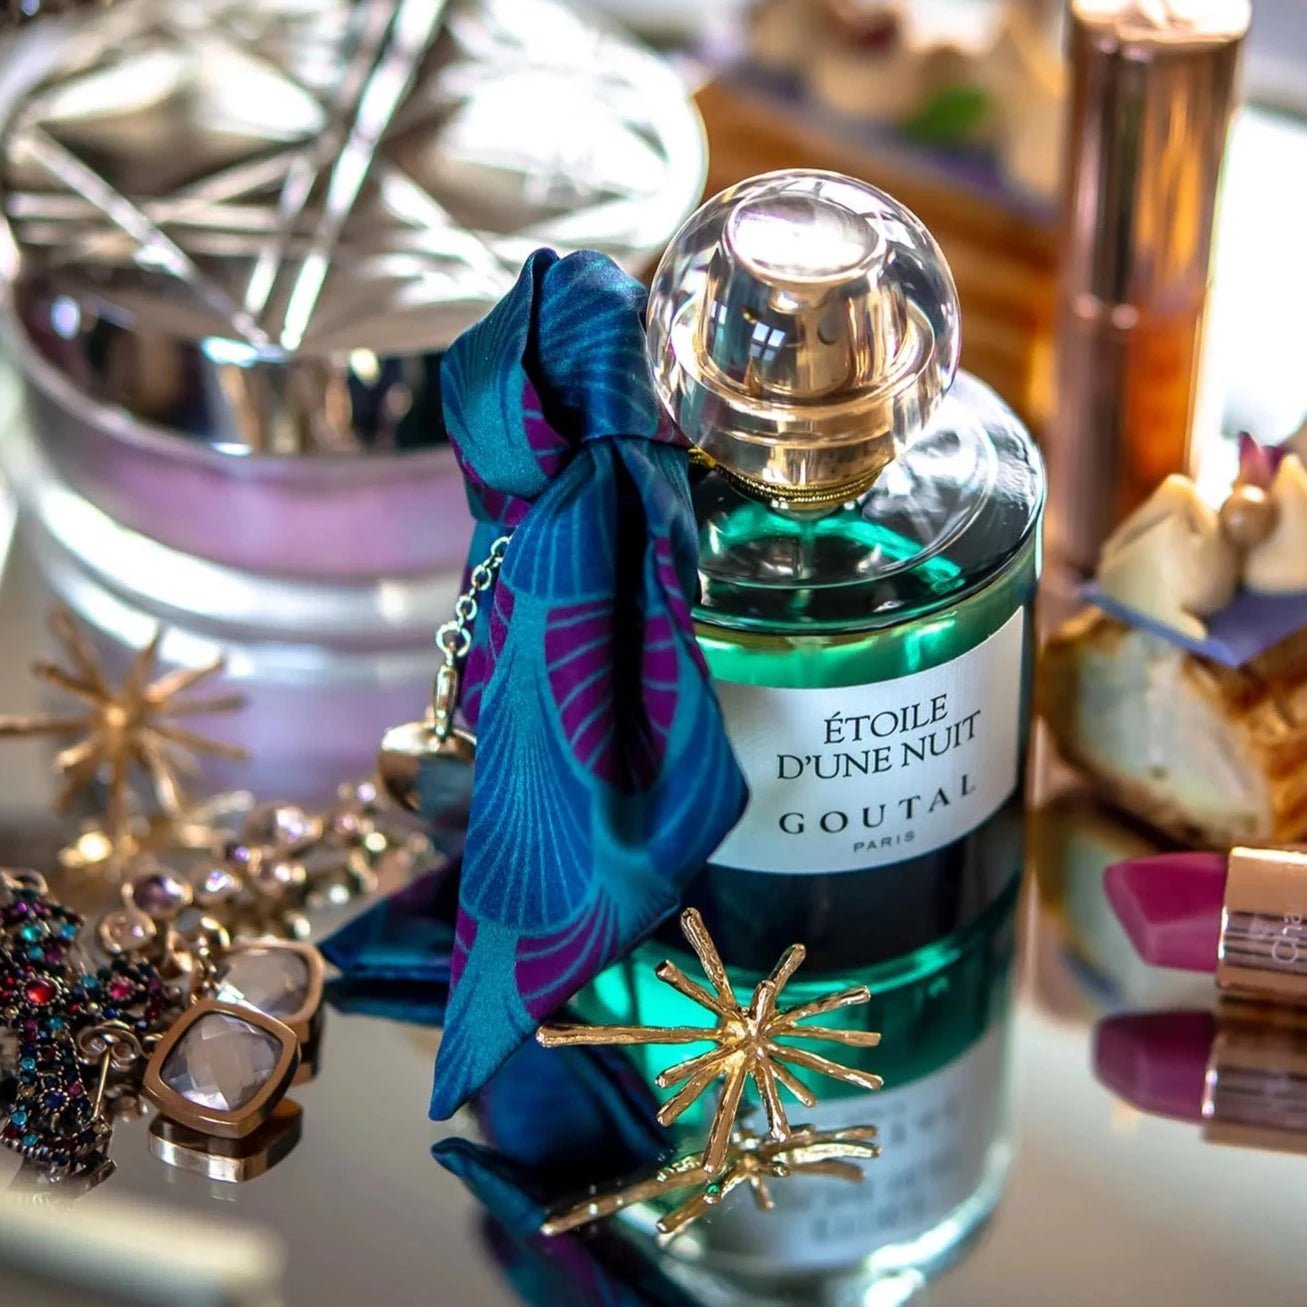 Goutal Etoile d'Une Nuit Body Indulgence Set | My Perfume Shop Australia